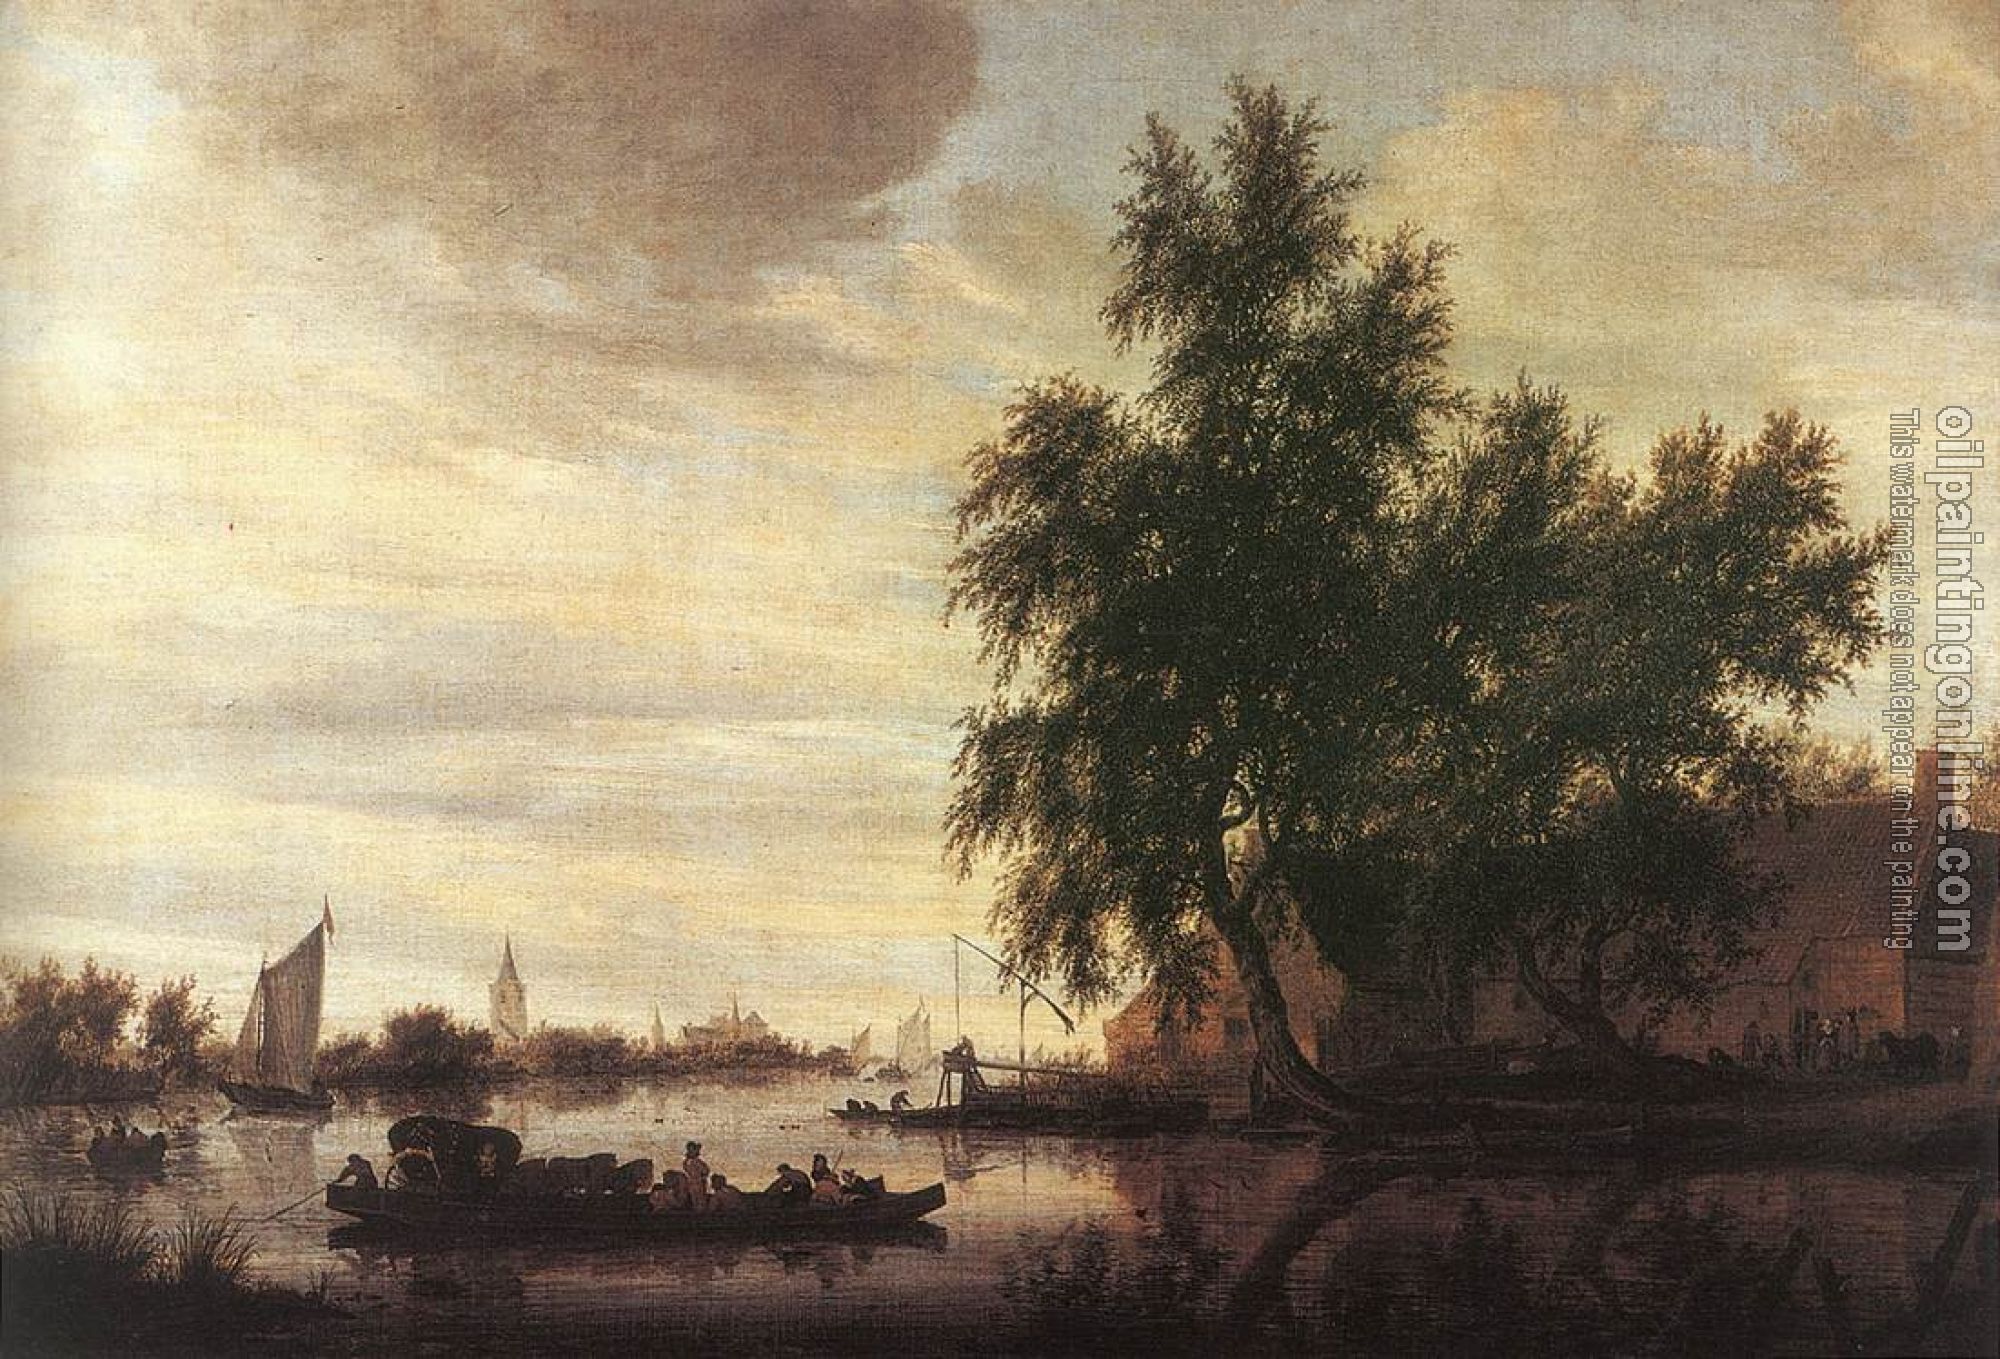 Ruysdael, Salomon van - The Ferry Boat